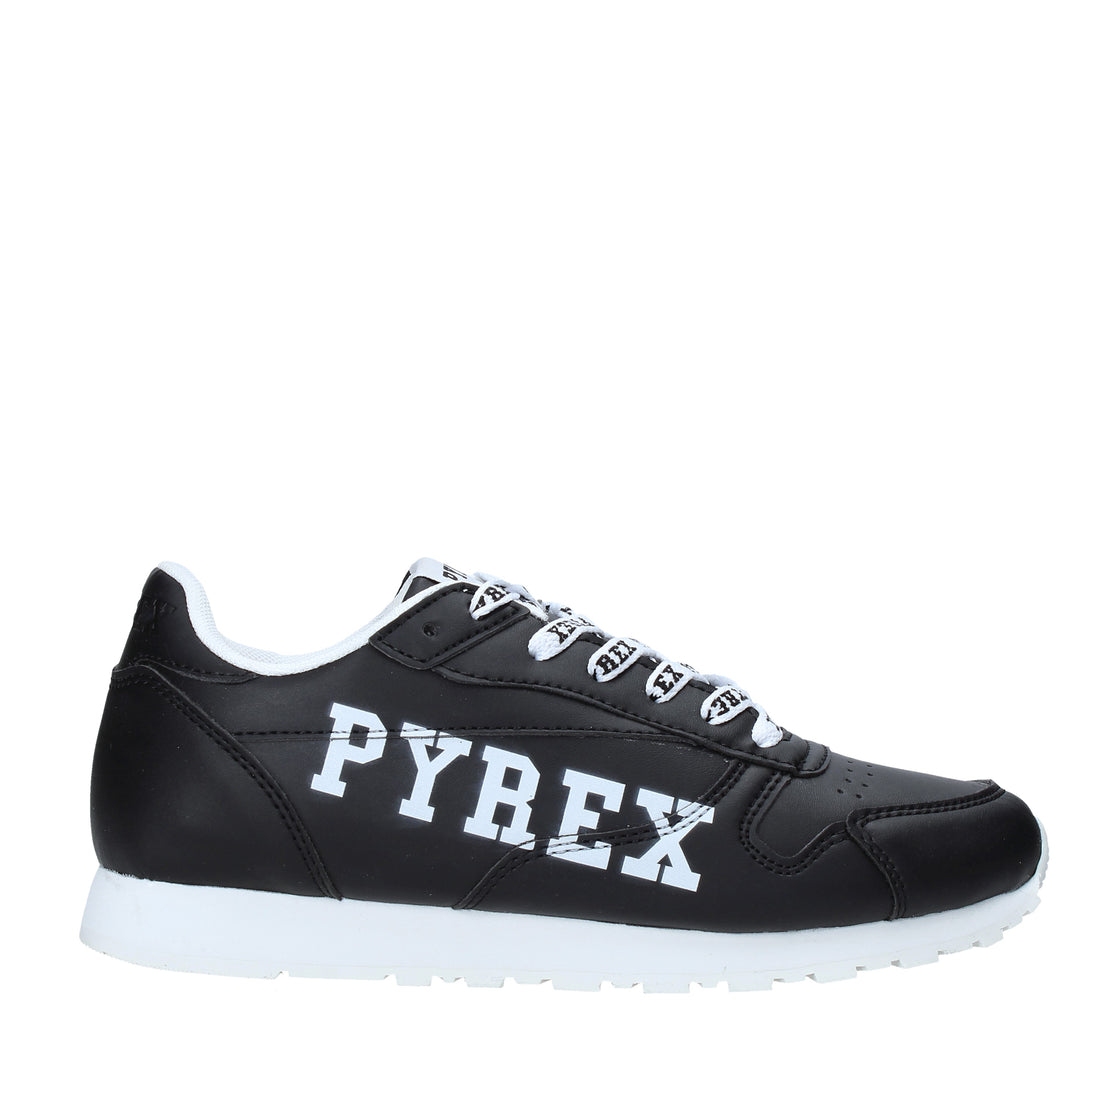 Sneakers Nero Pyrex